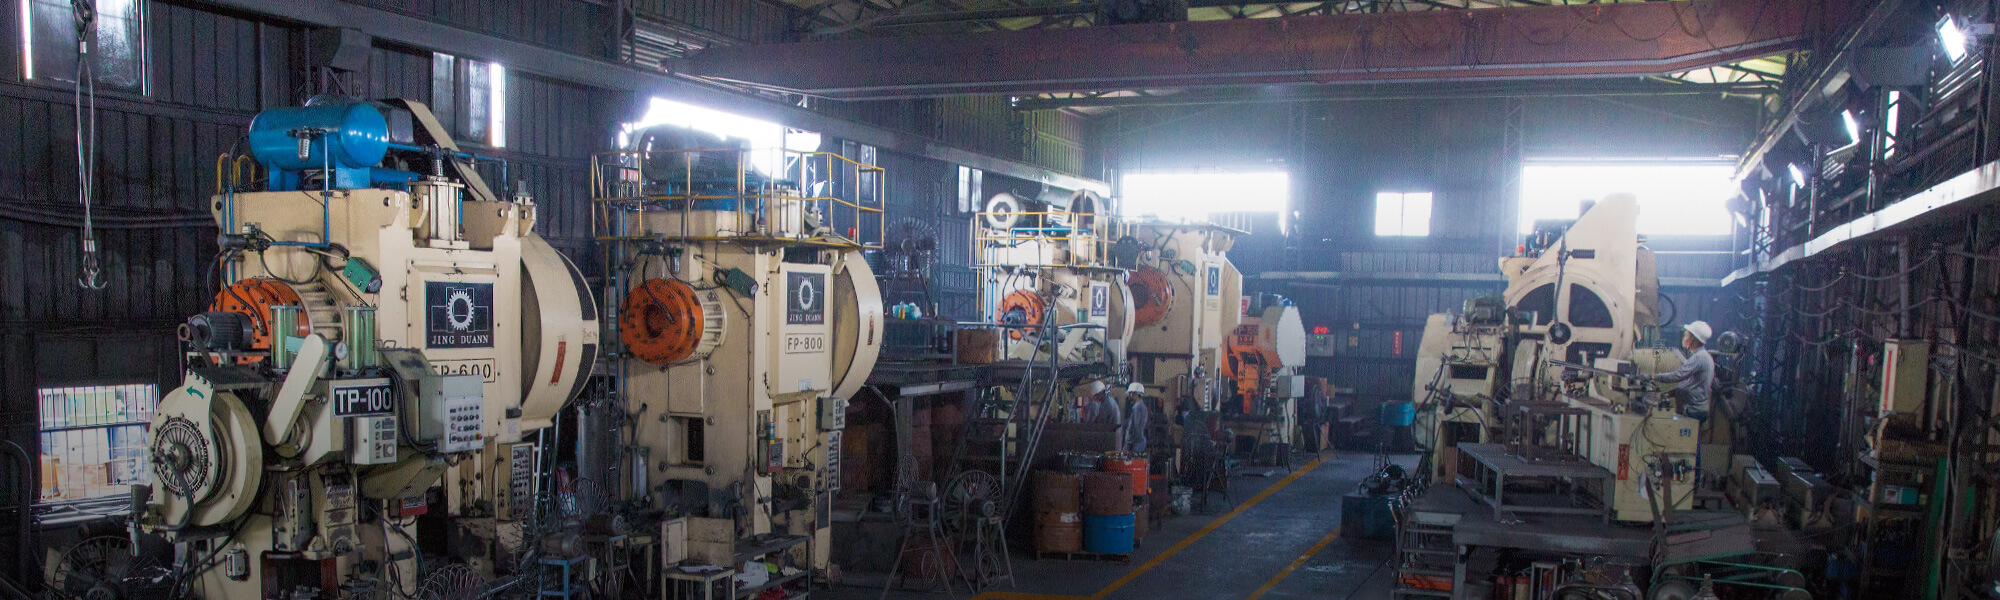 Shin Huang Forging Industry Process